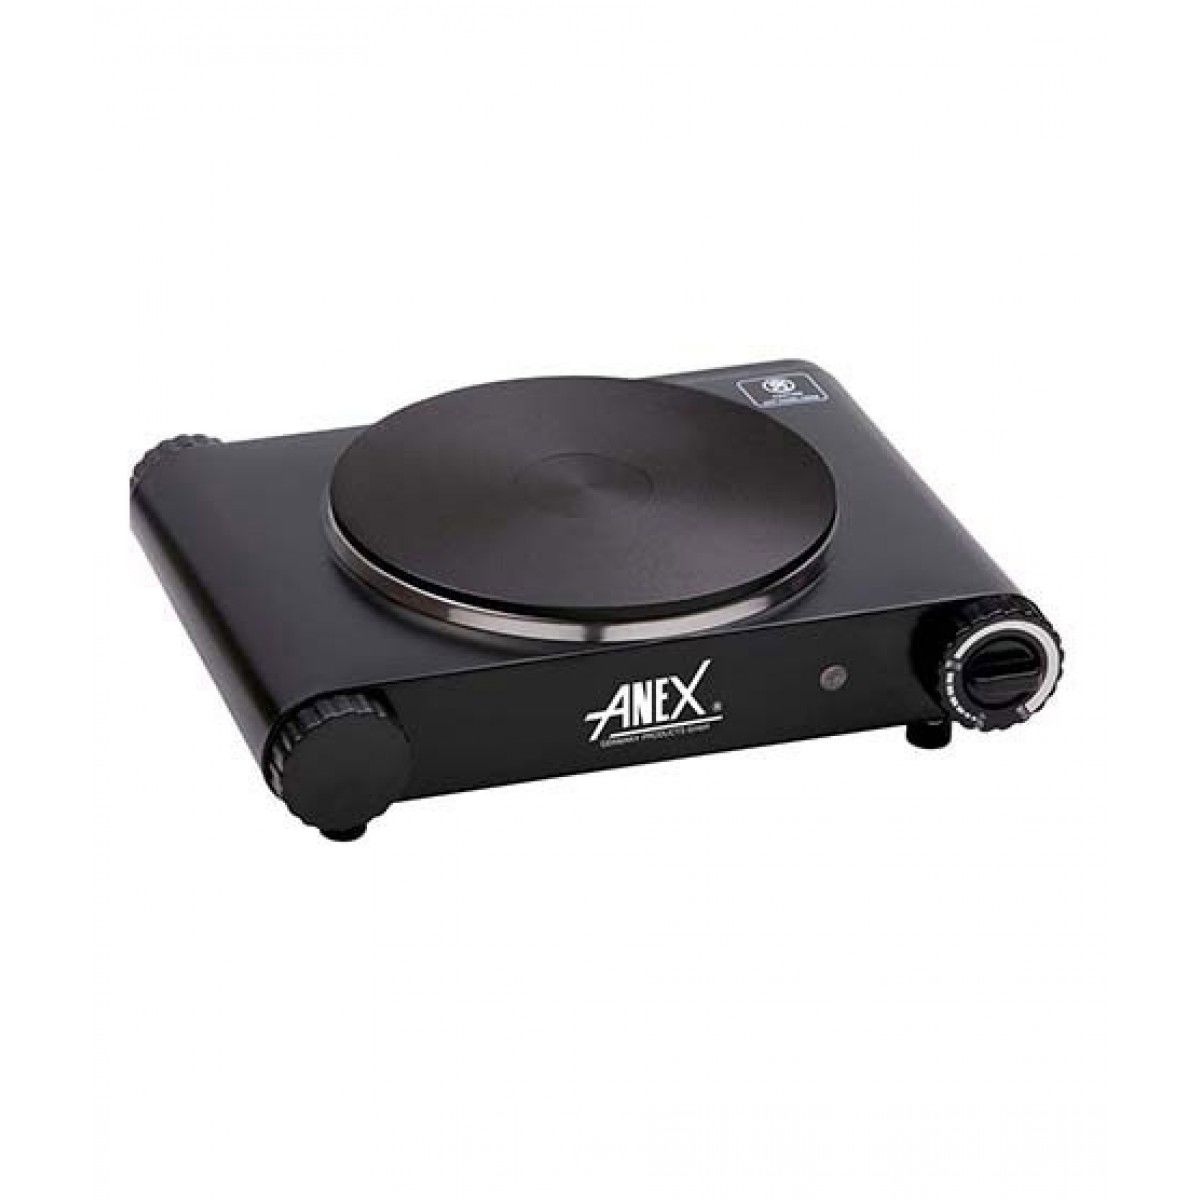 Anex Kitchen Appliances Hot Plate - AG-2061